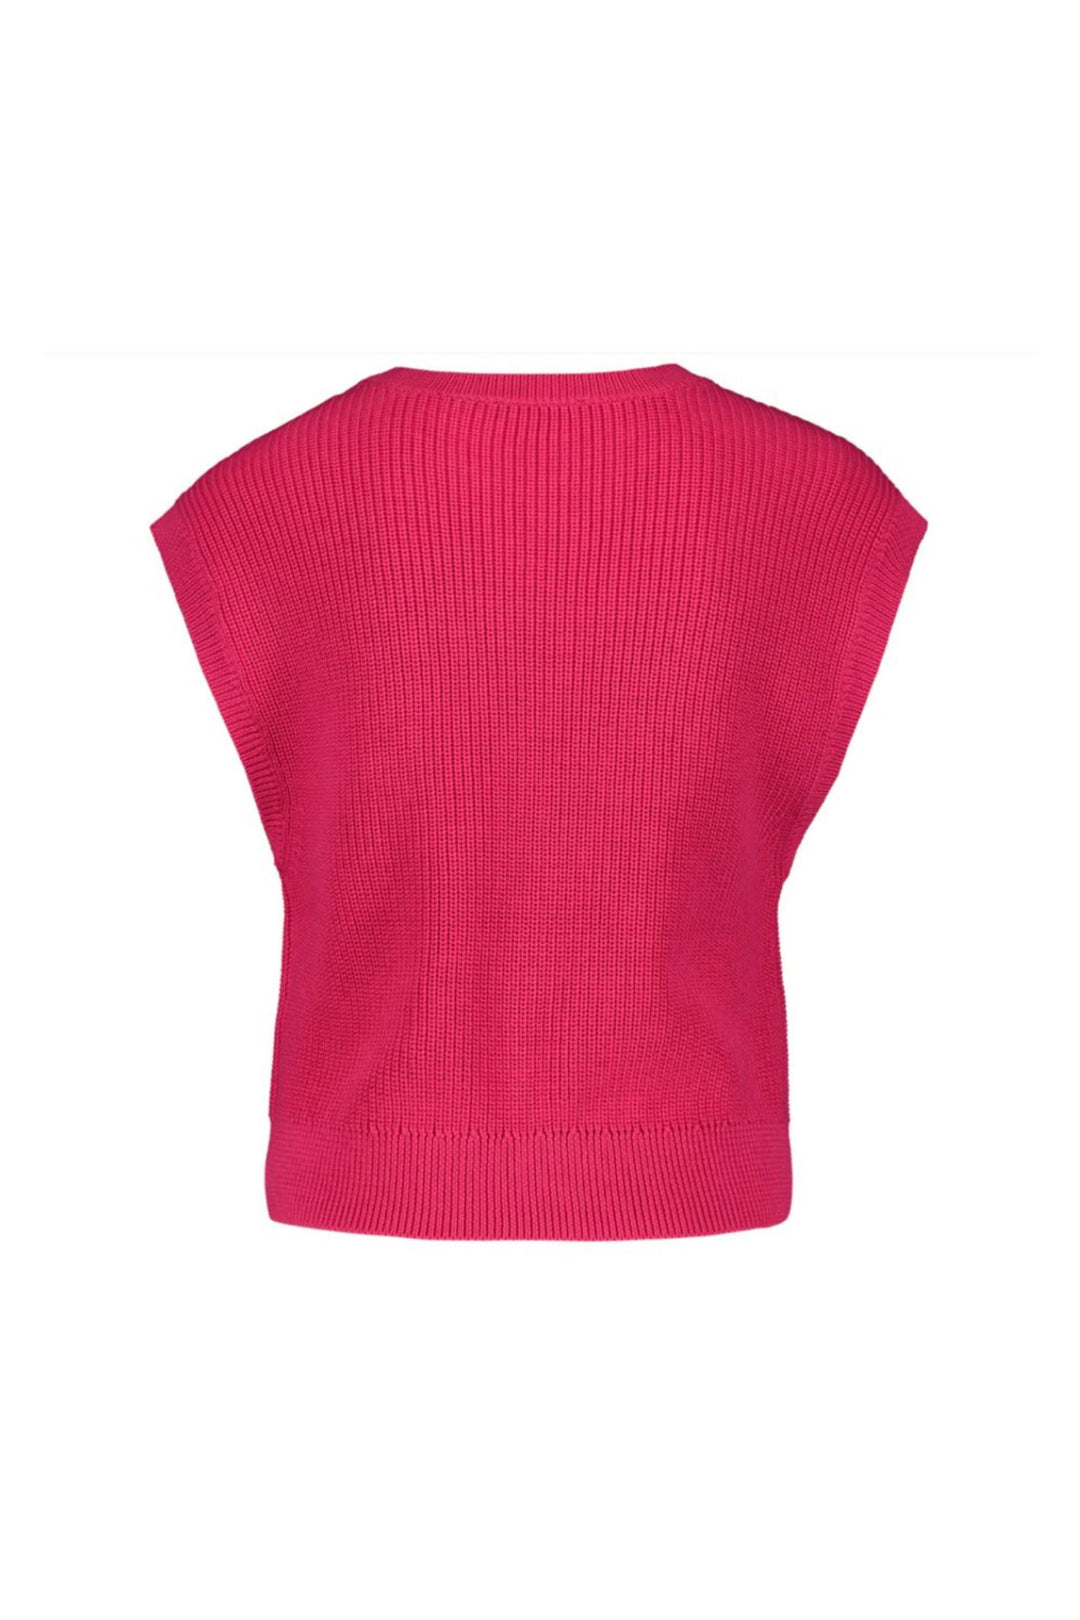 Taifun 472436 Luminous Pink Knitted Cap Sleeve Jumper